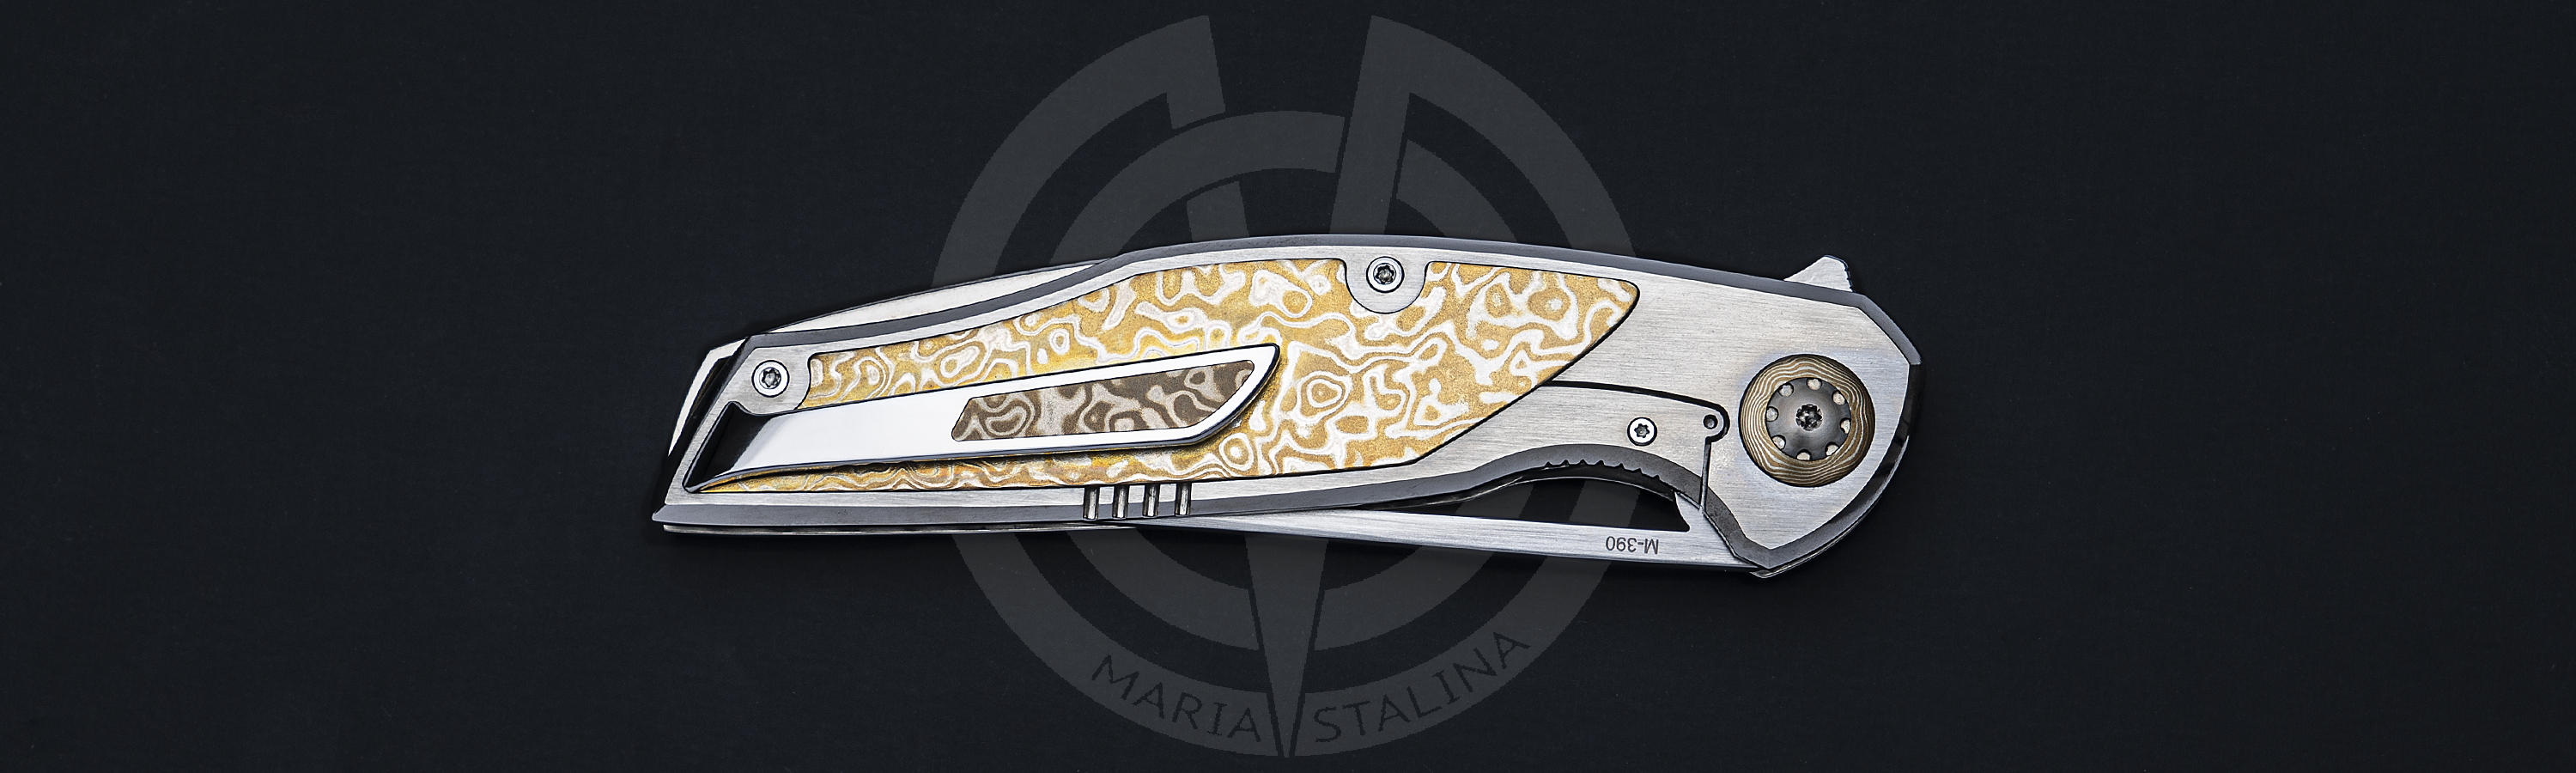 M390 steel of a knife Blond